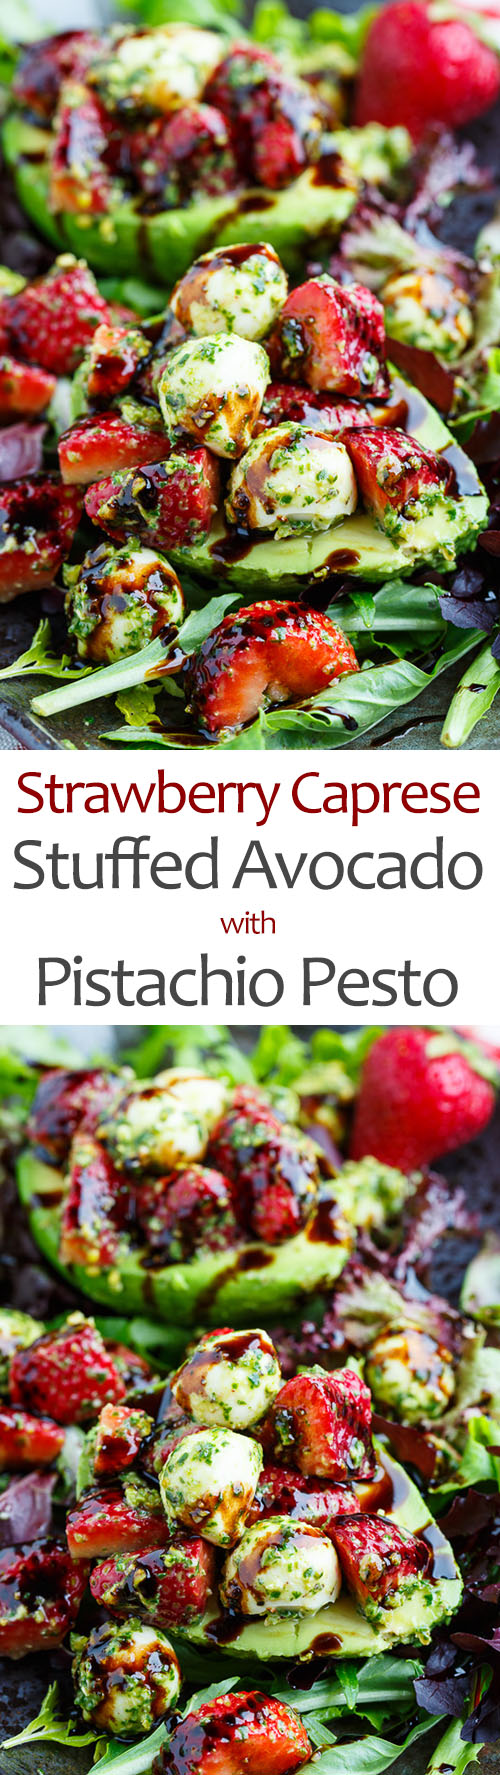 Strawberry Caprese Stuffed Avocados with Pistachio Pesto